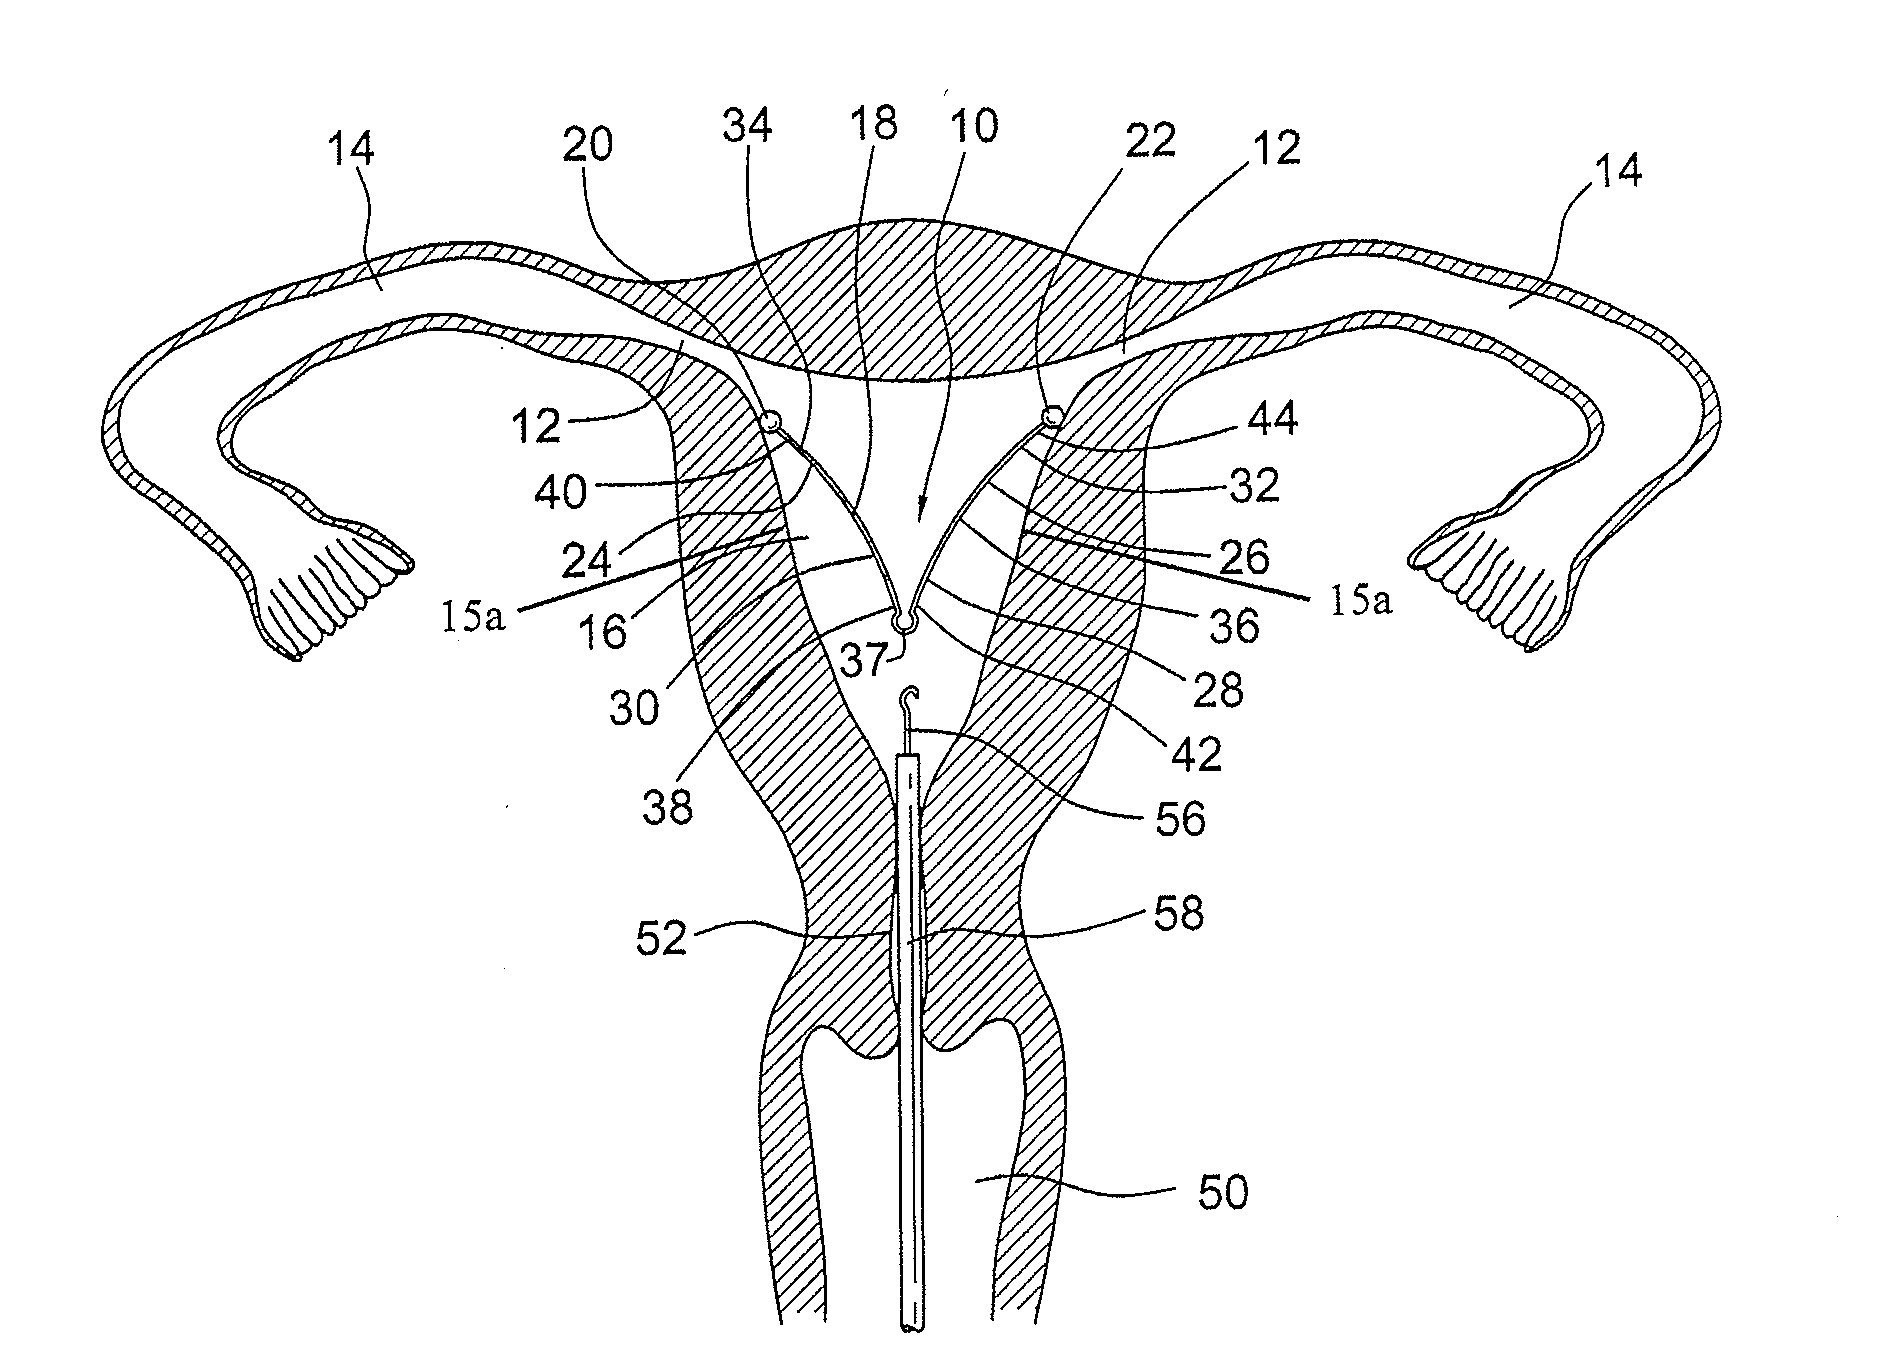 Intrauterine device